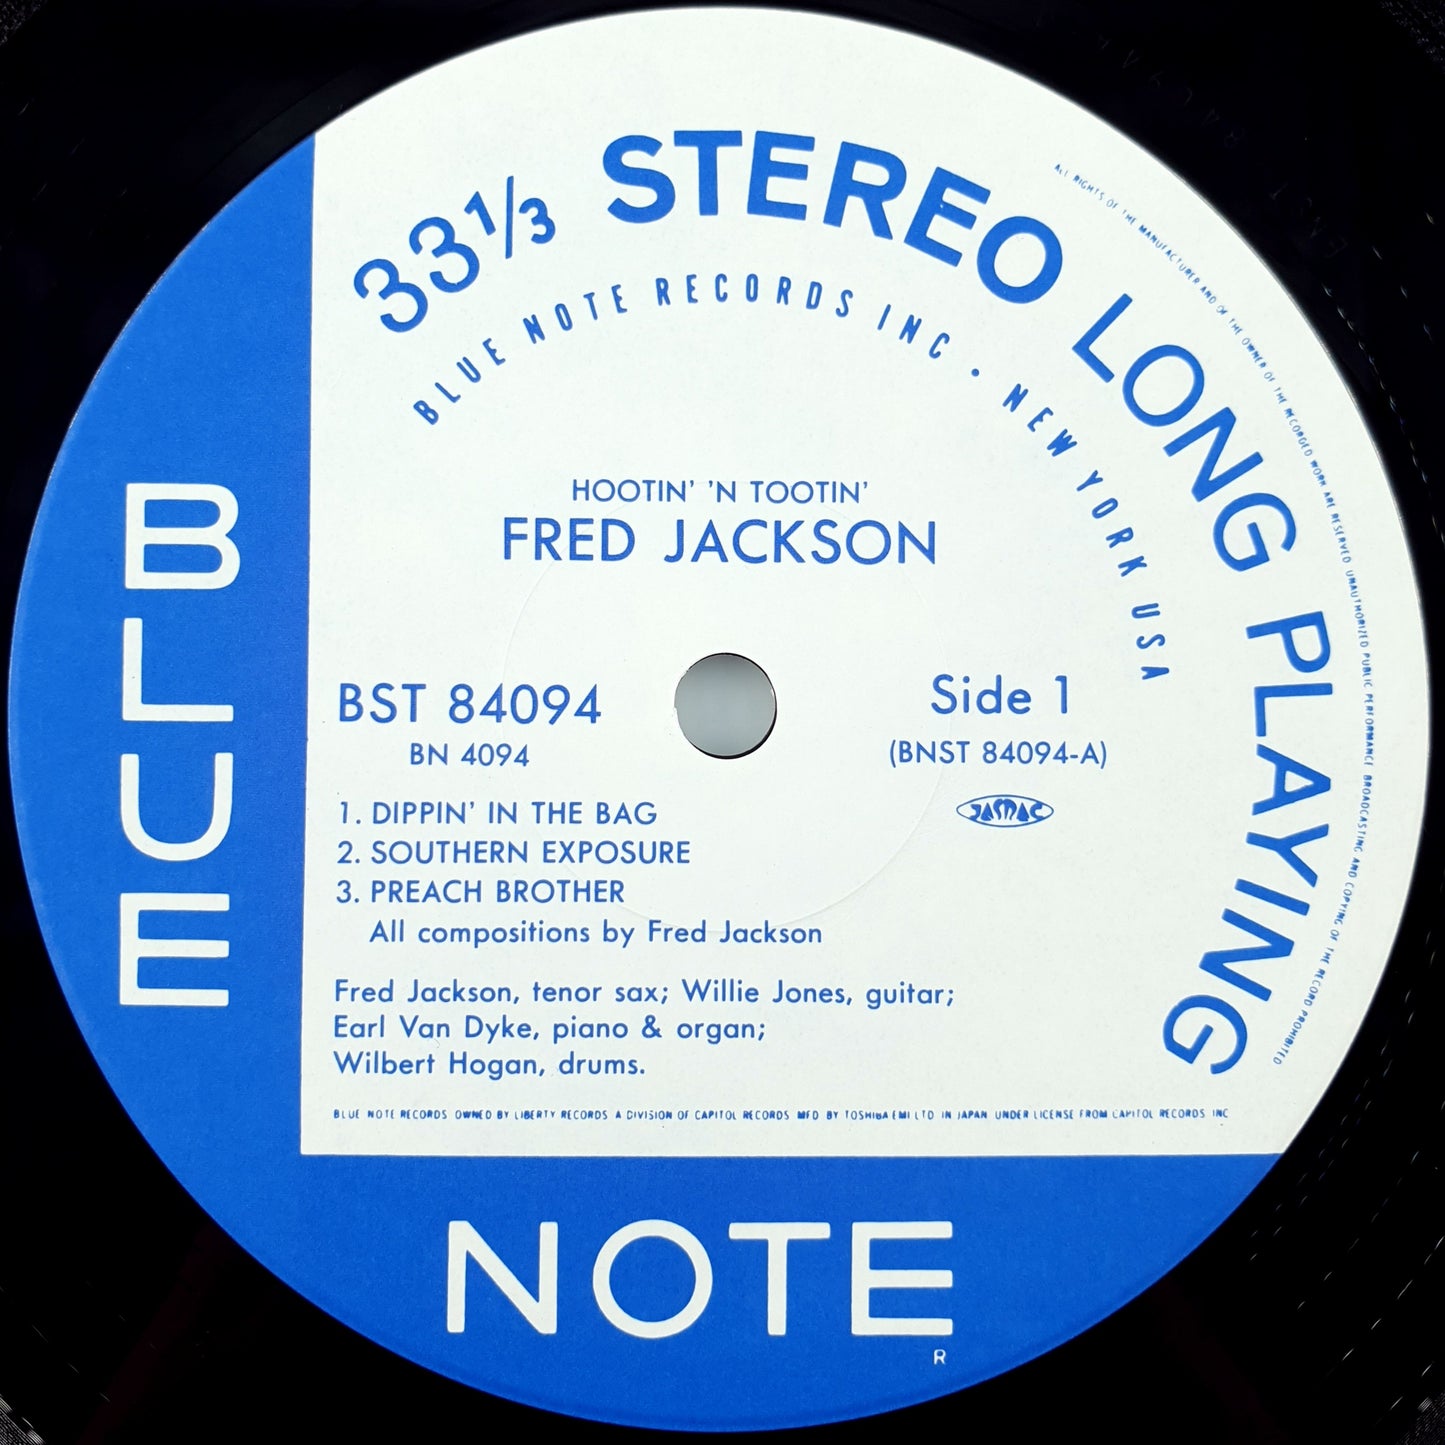 Fred Jackson – Hootin' 'N Tootin'